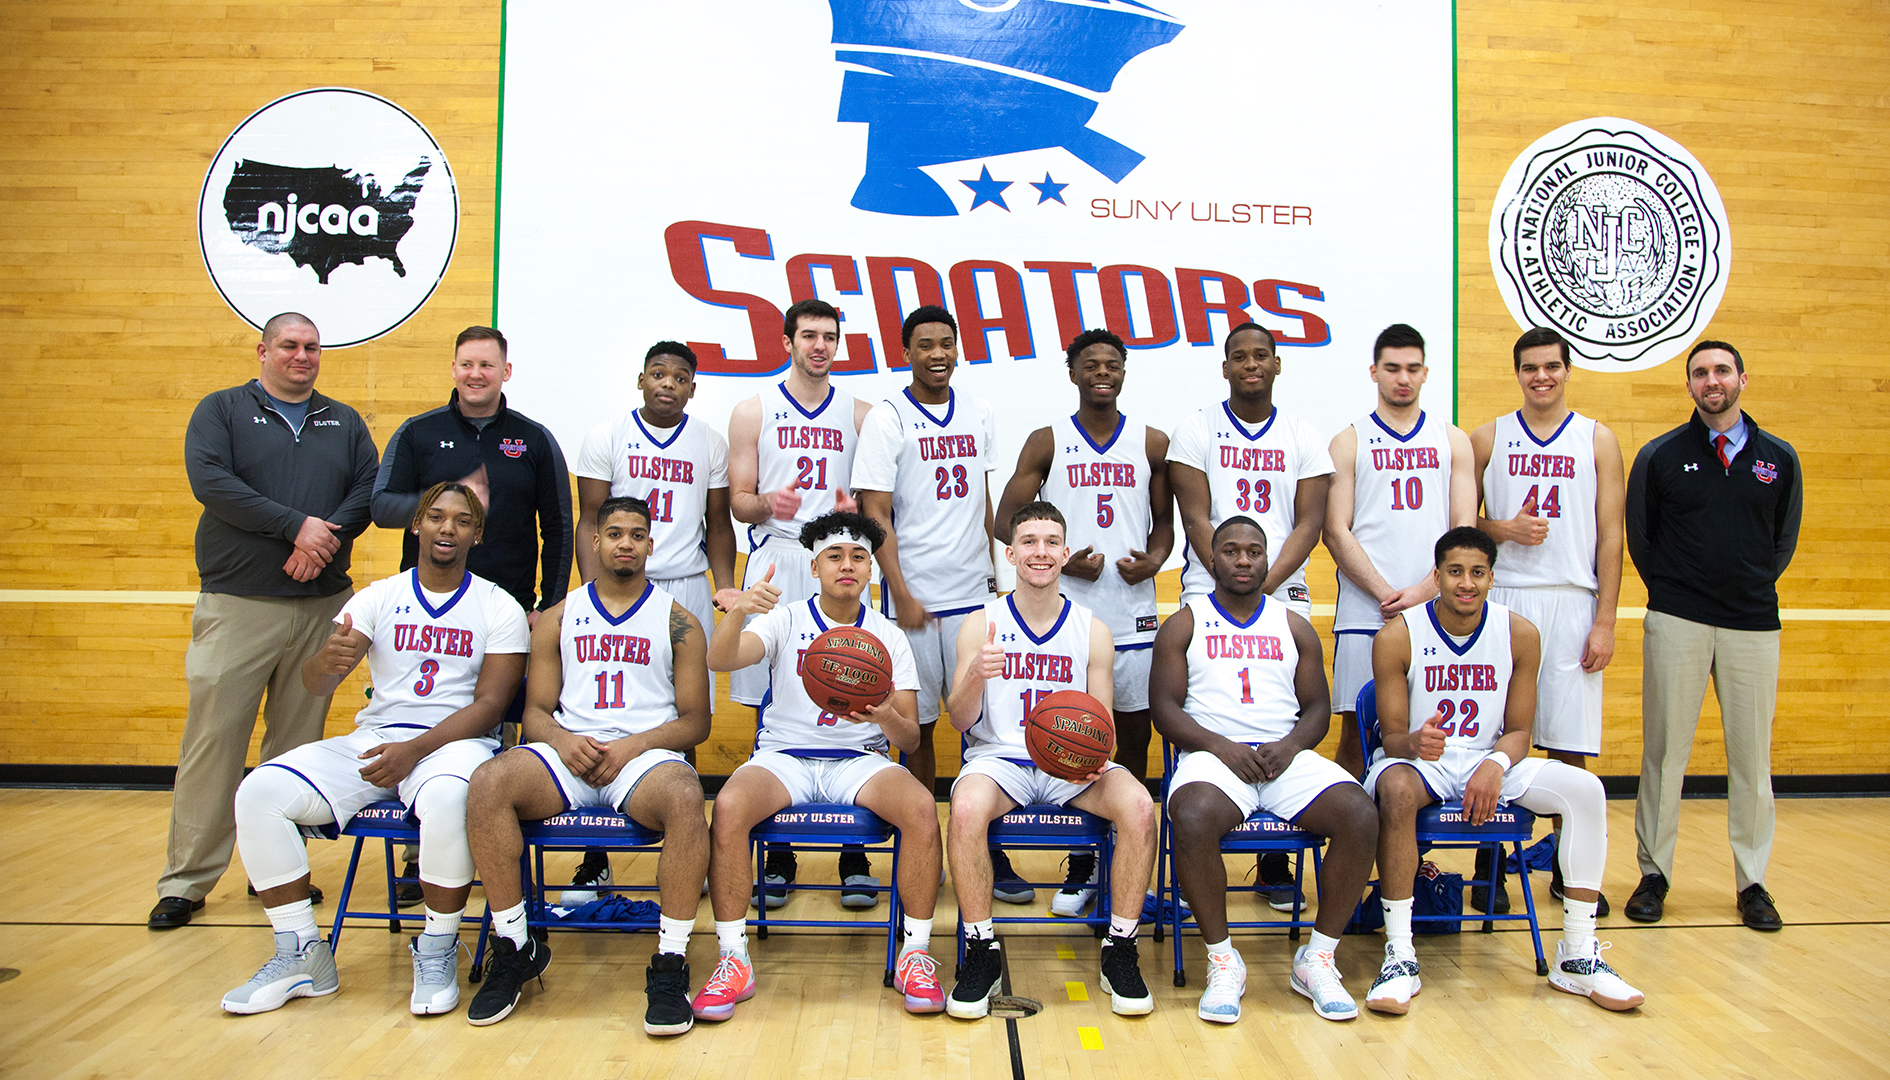 SUNY Ulster 2018 men's basketball team